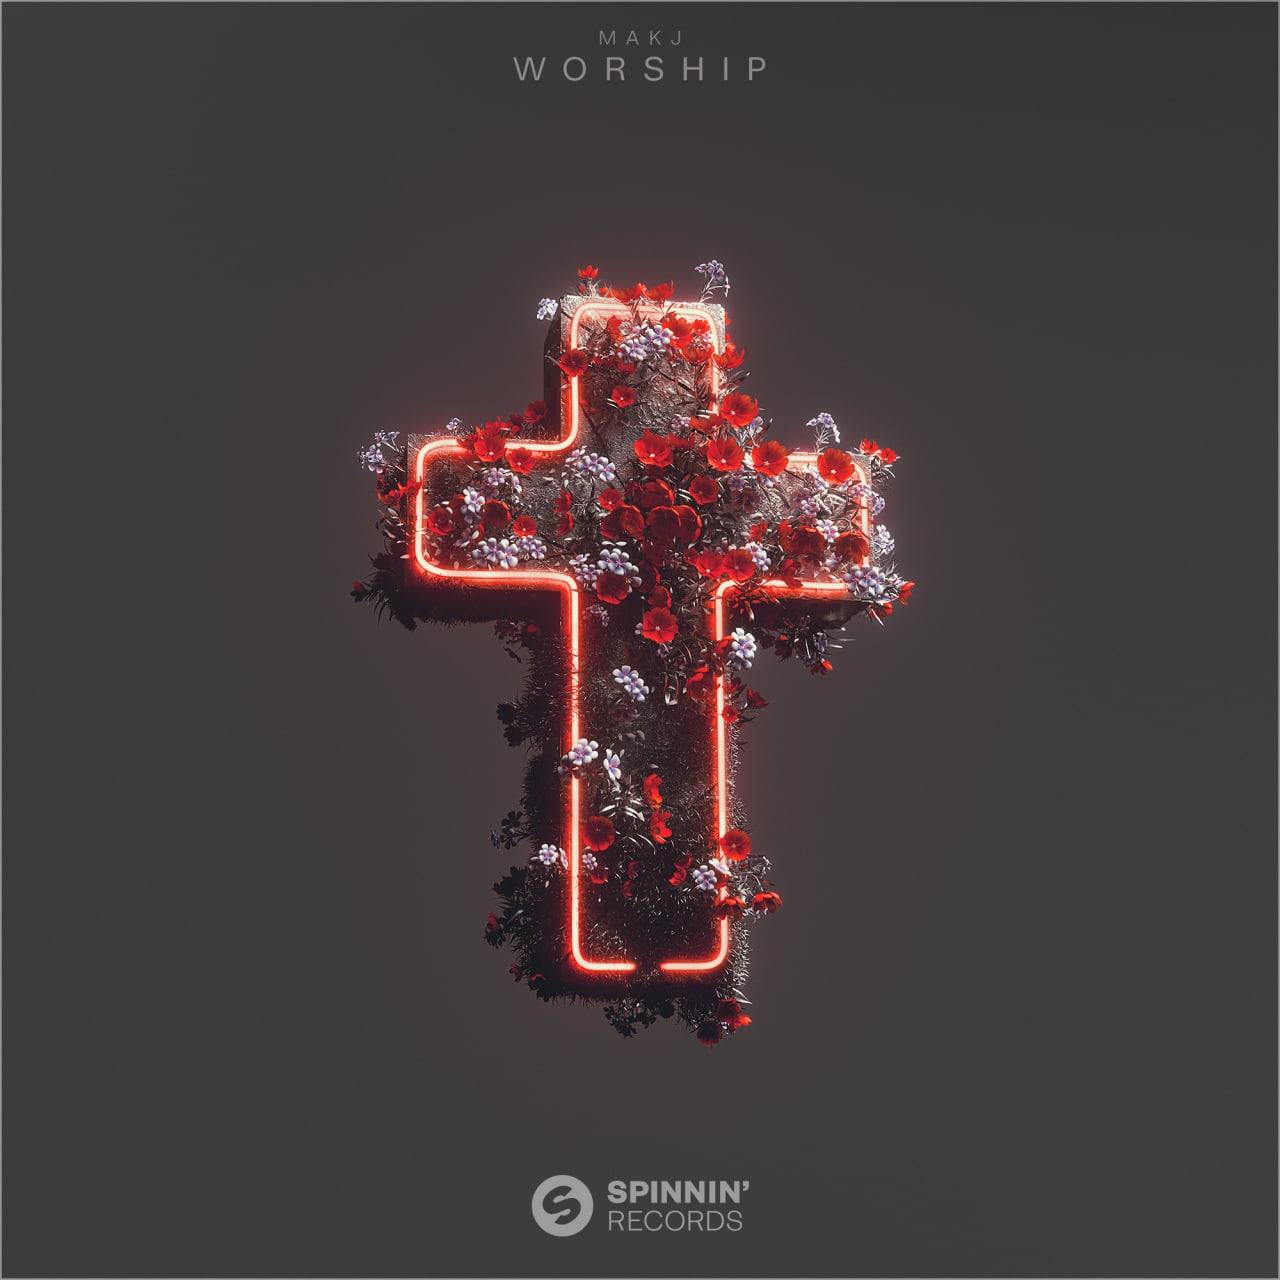 Makj - Worship (Extended Mix)